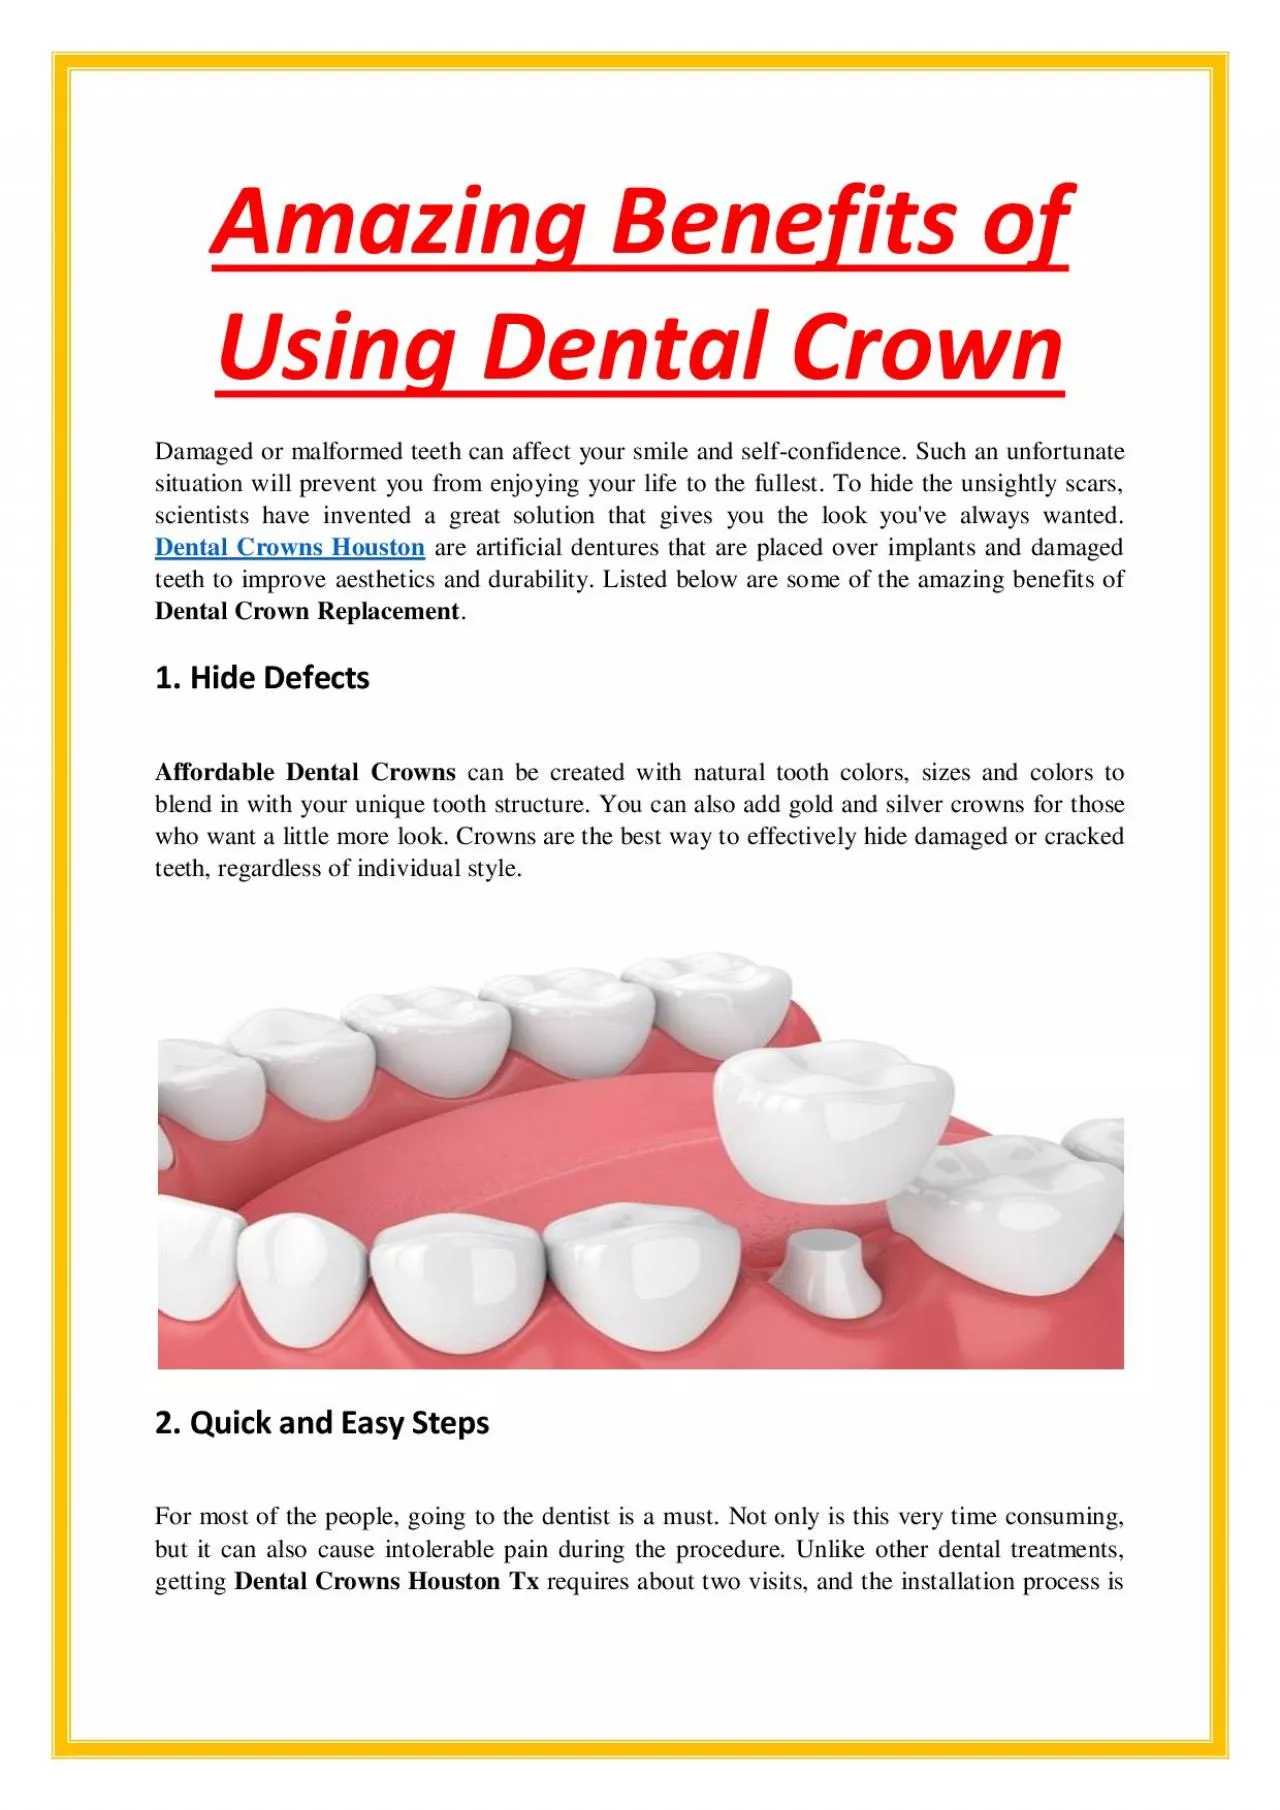 Amazing Benefits of Using Dental Crown